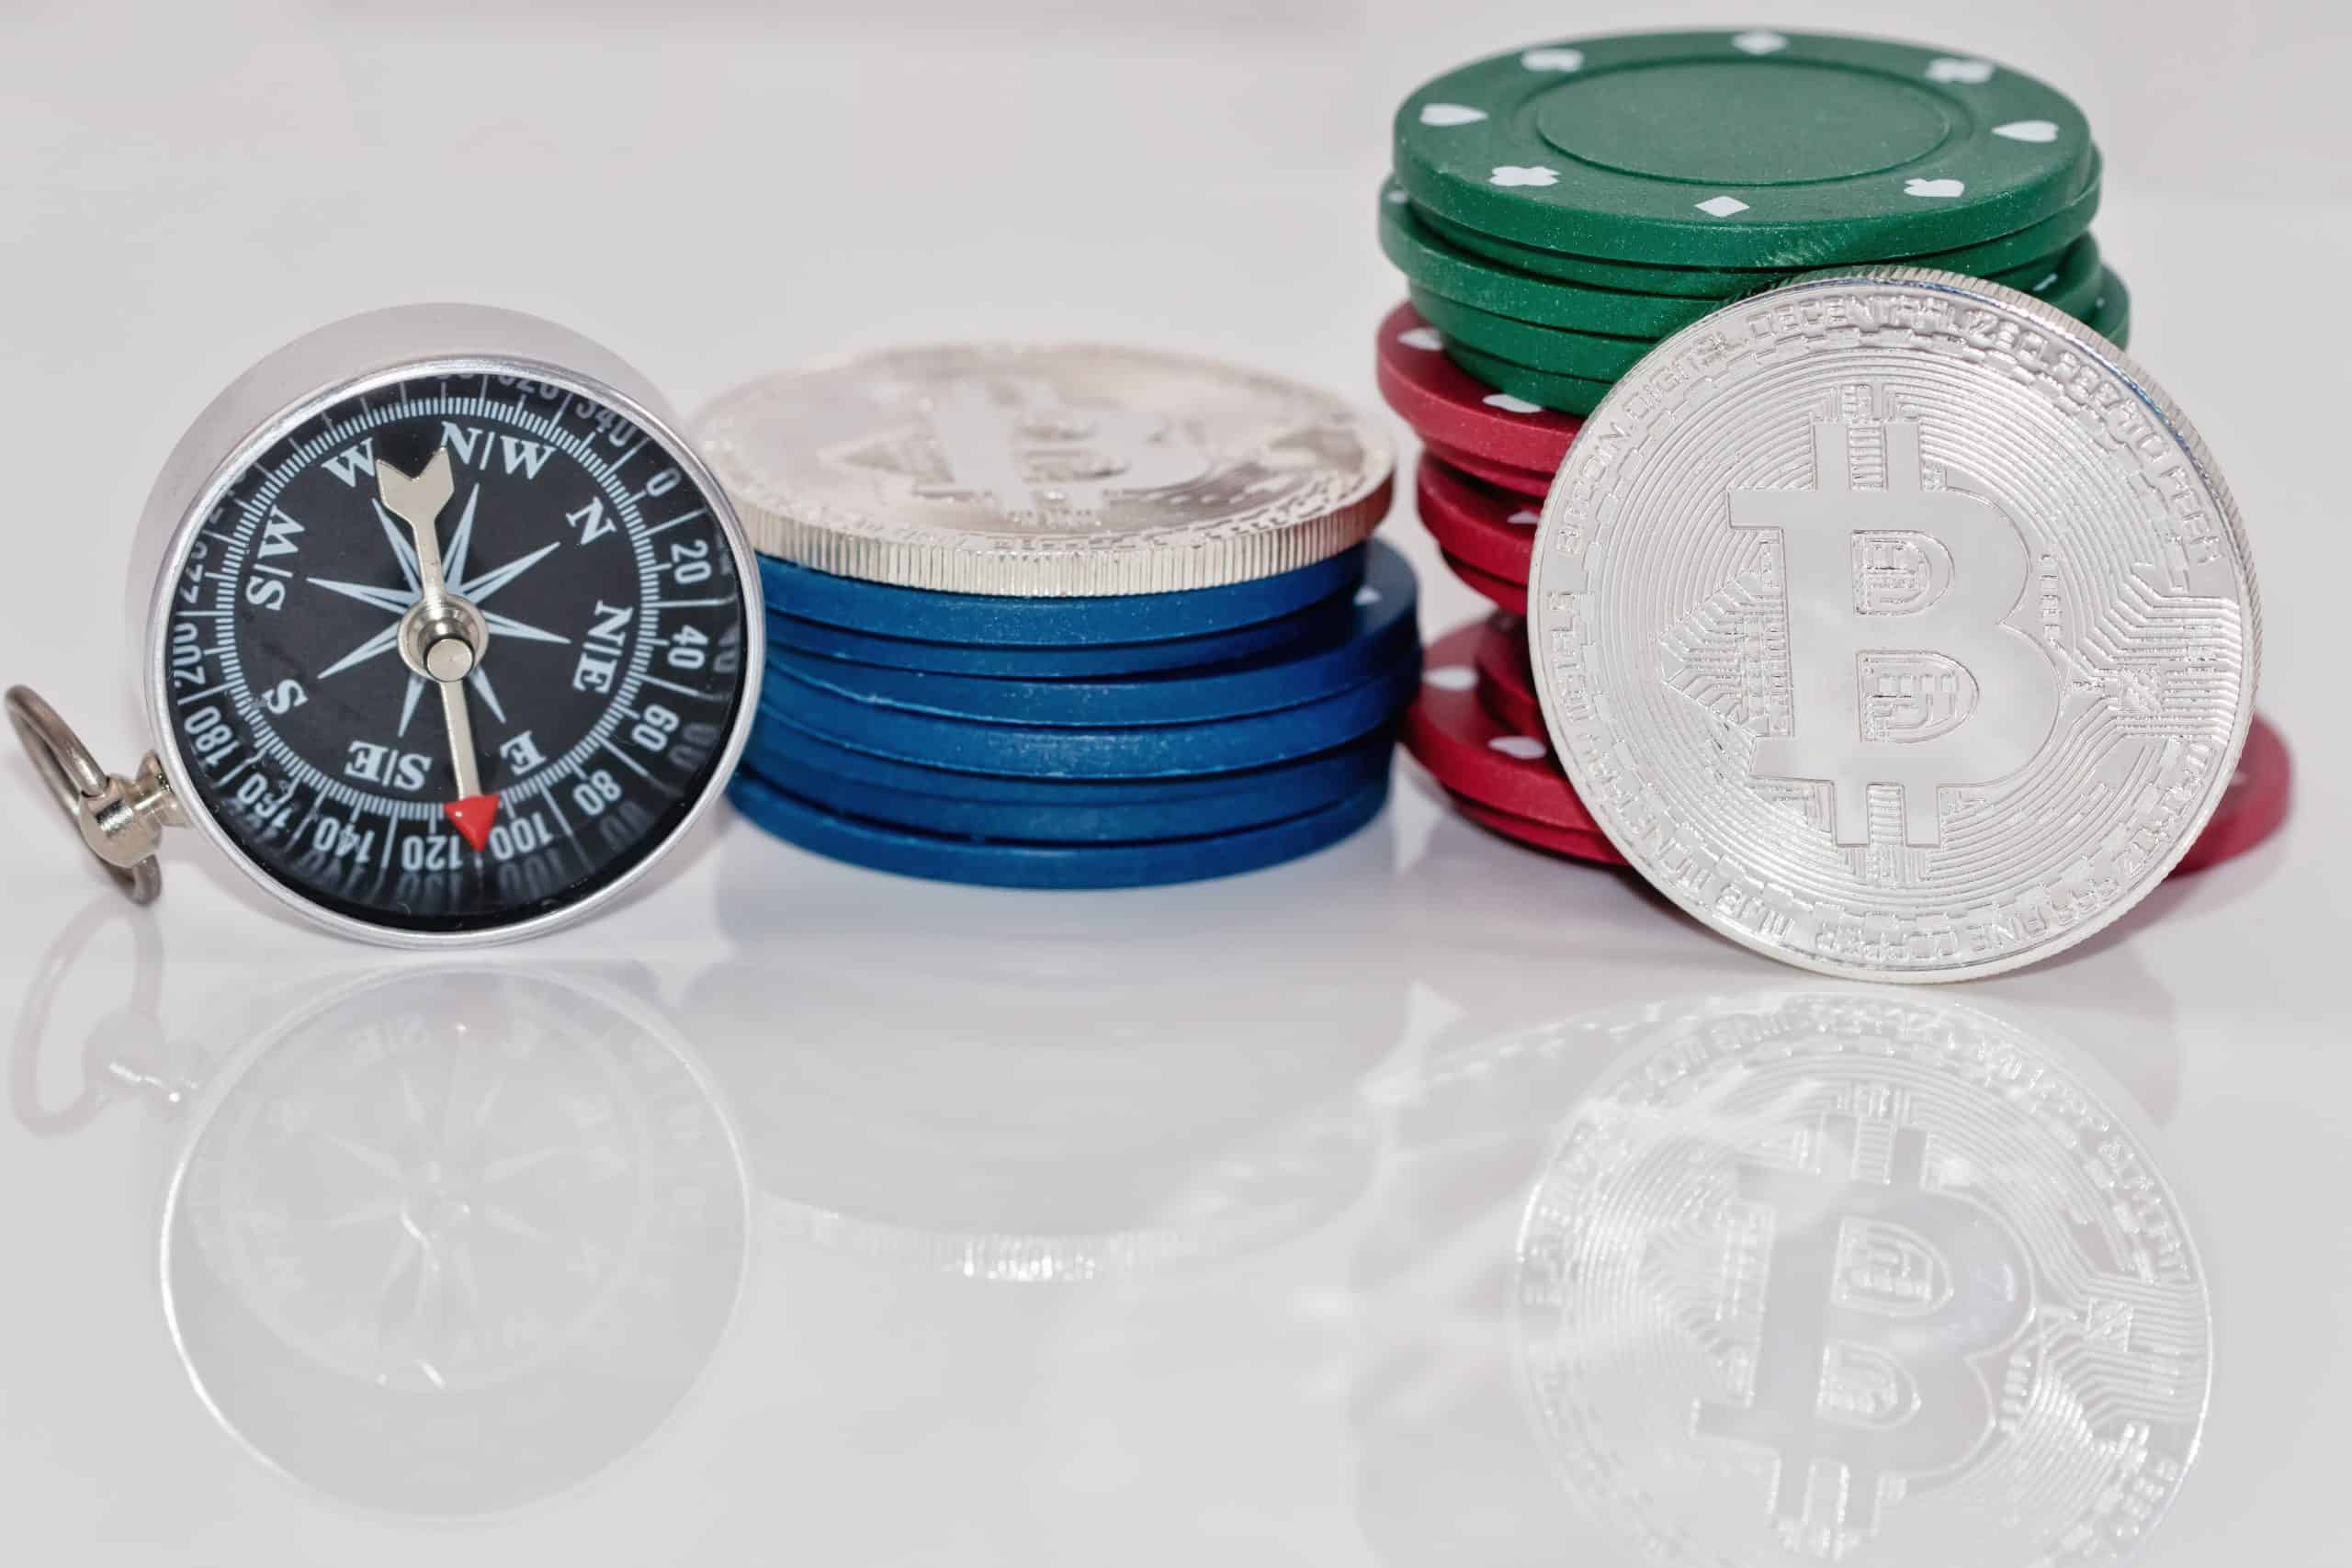 Bitcoin poker games